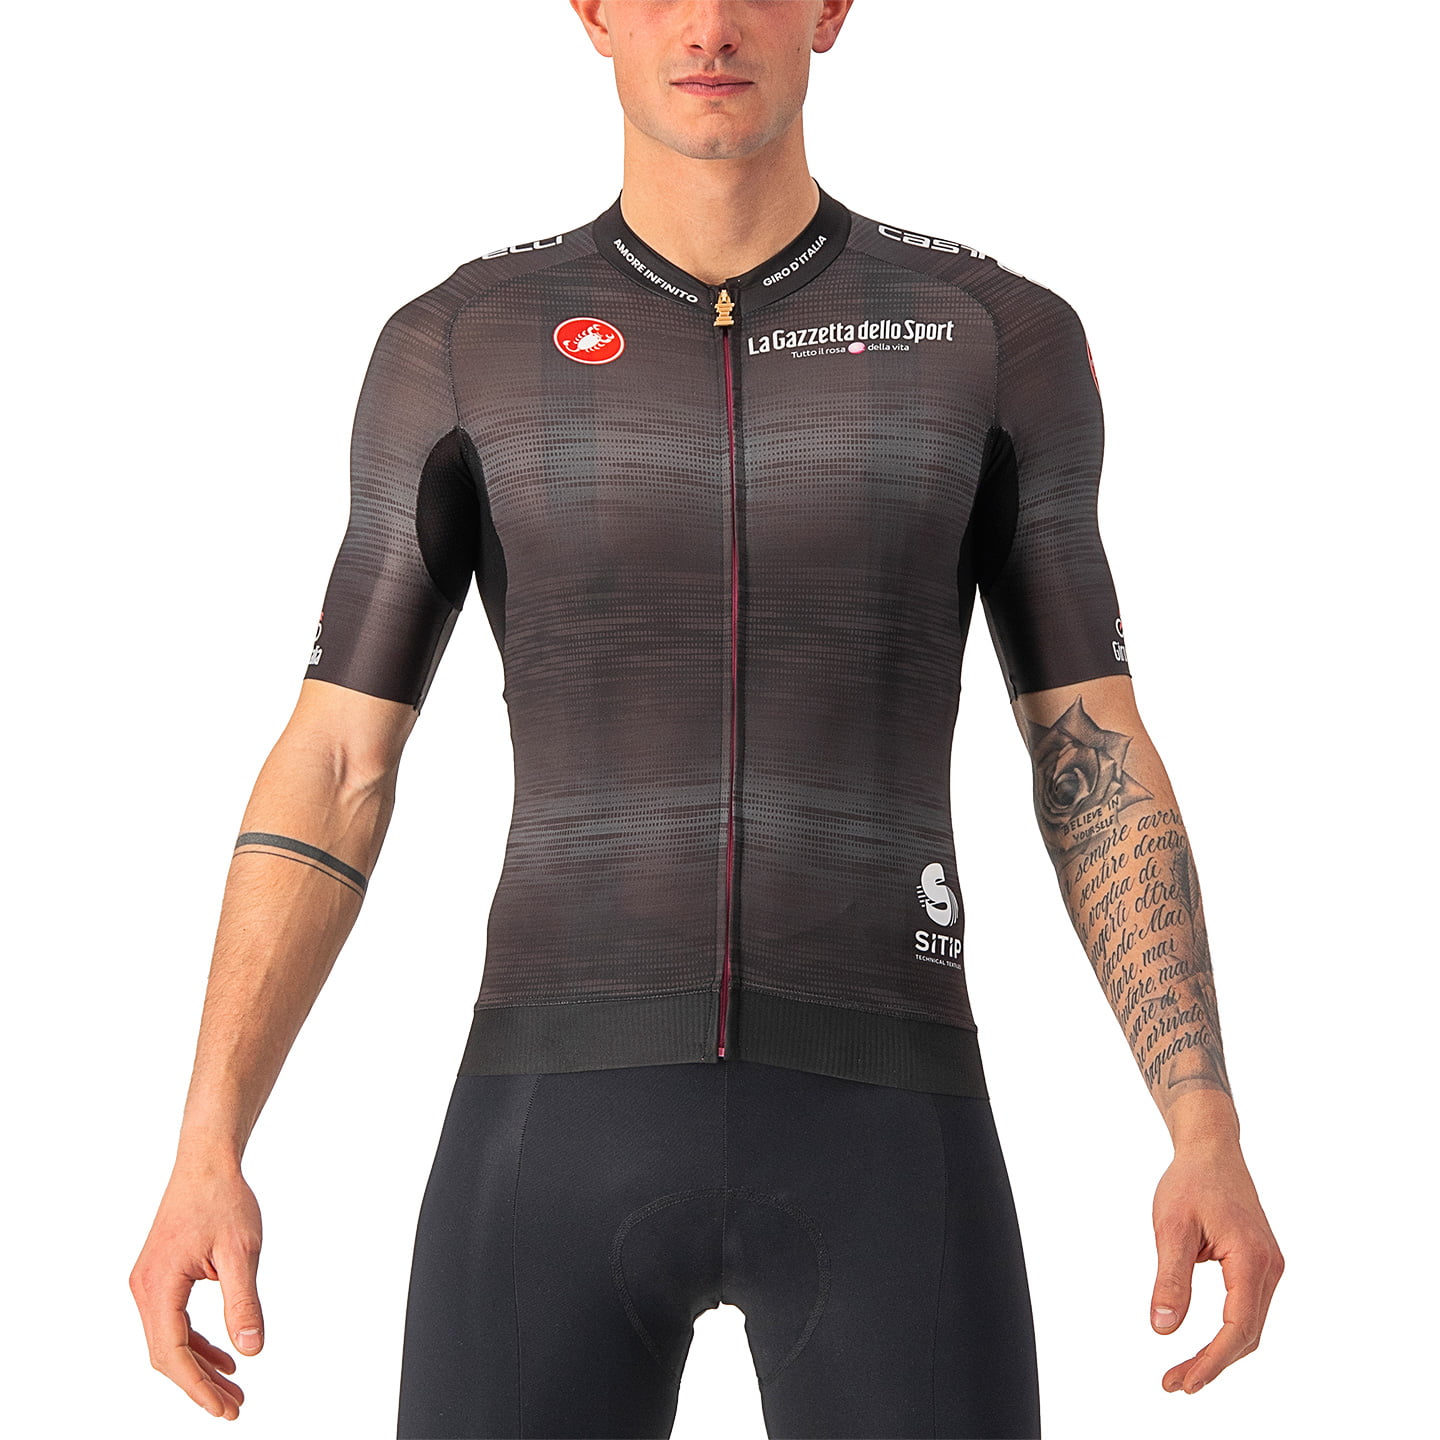 GIRO D’ITALIA Short Sleeve Race Jersey Maglia Nera 2022 Short Sleeve Jersey, for men, size L, Cycling shirt, Cycle clothing